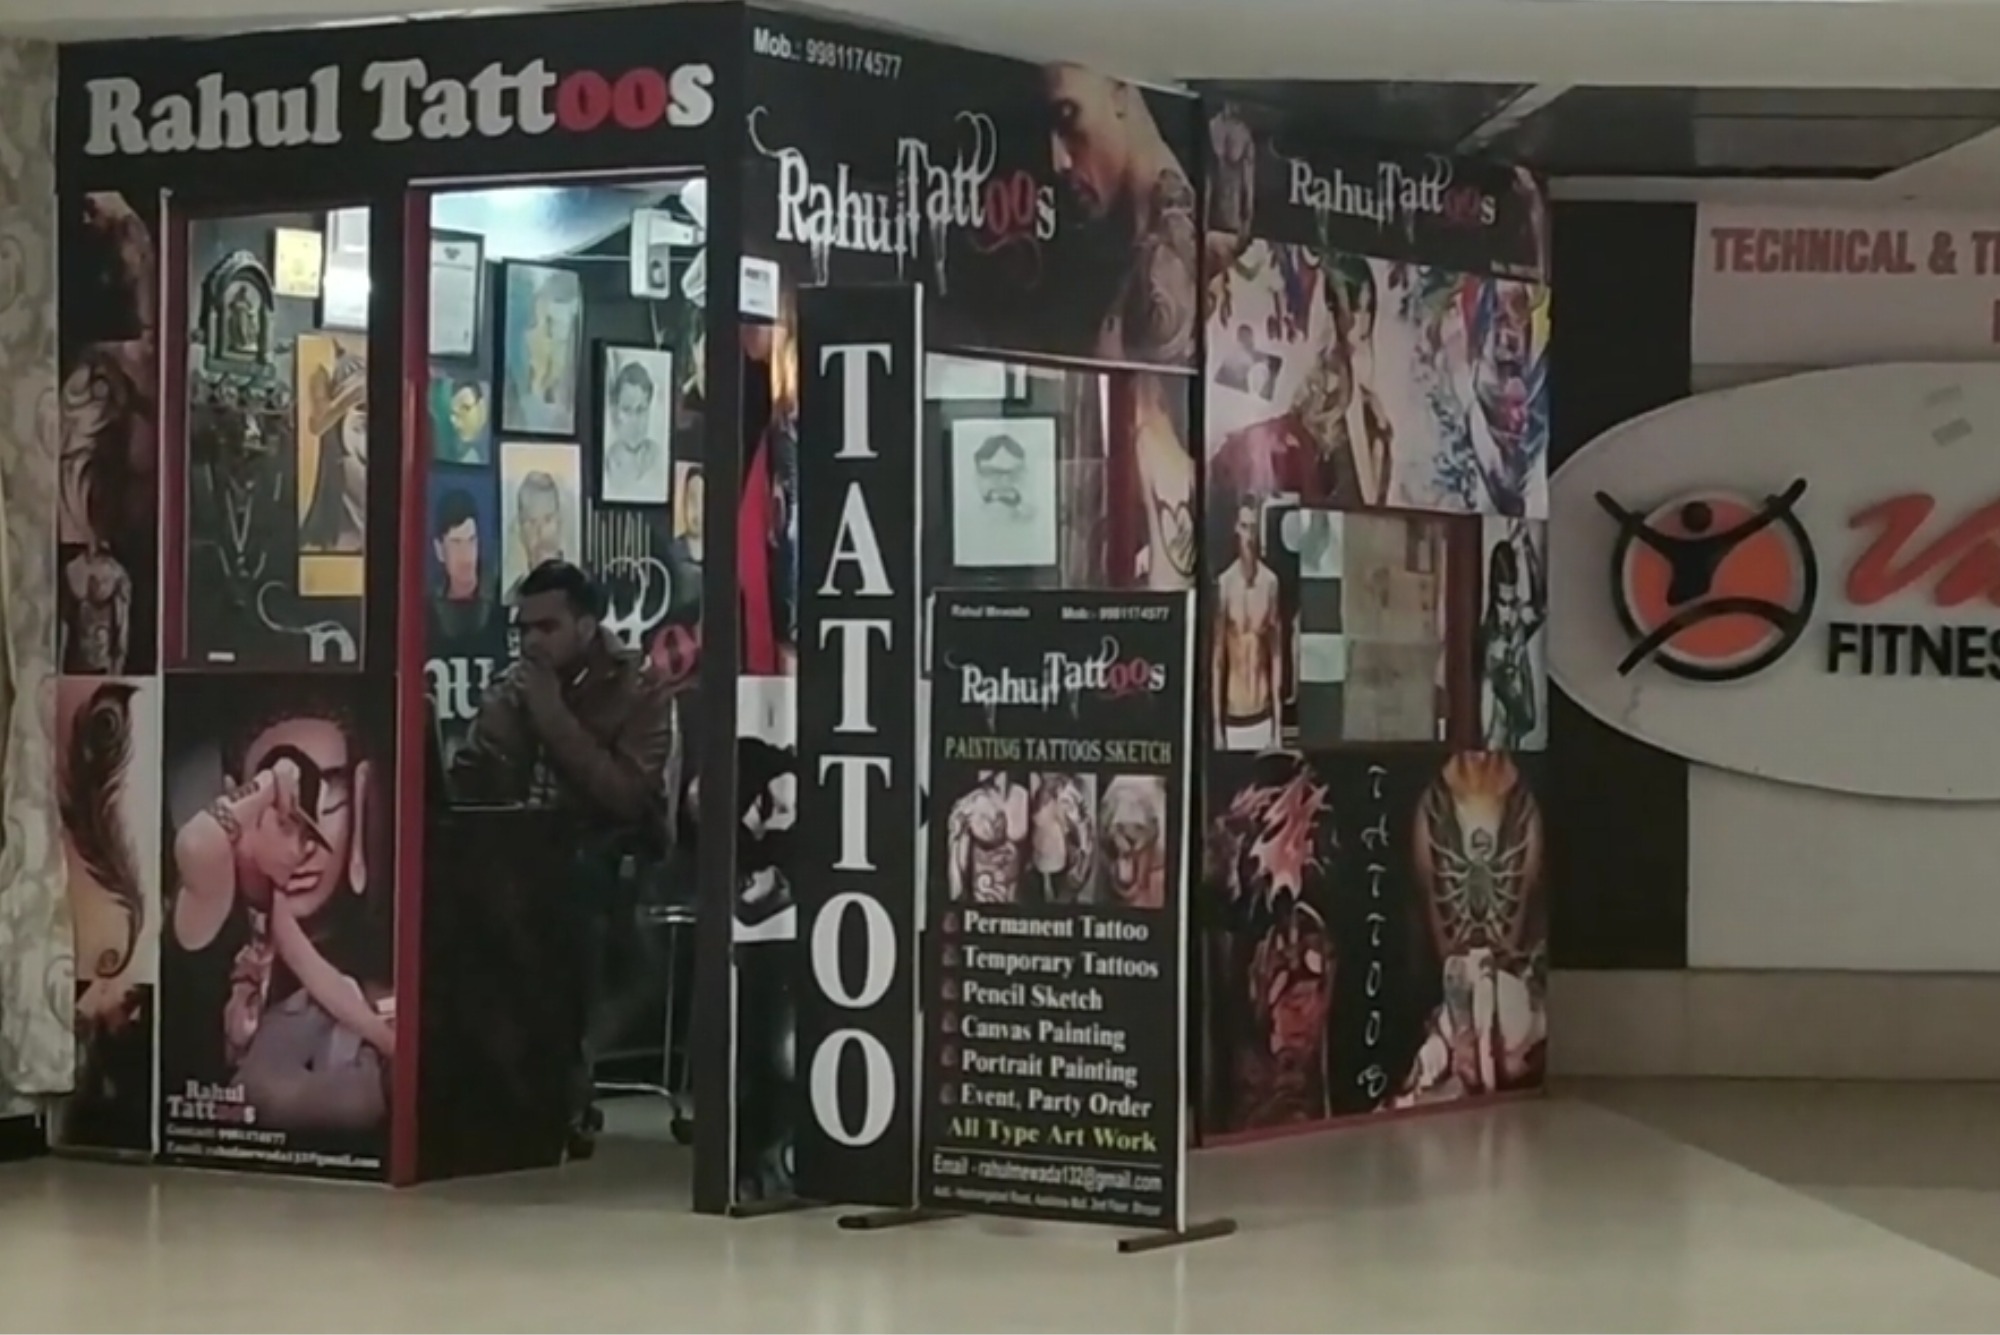 Finding Tattoo Shops Near Me